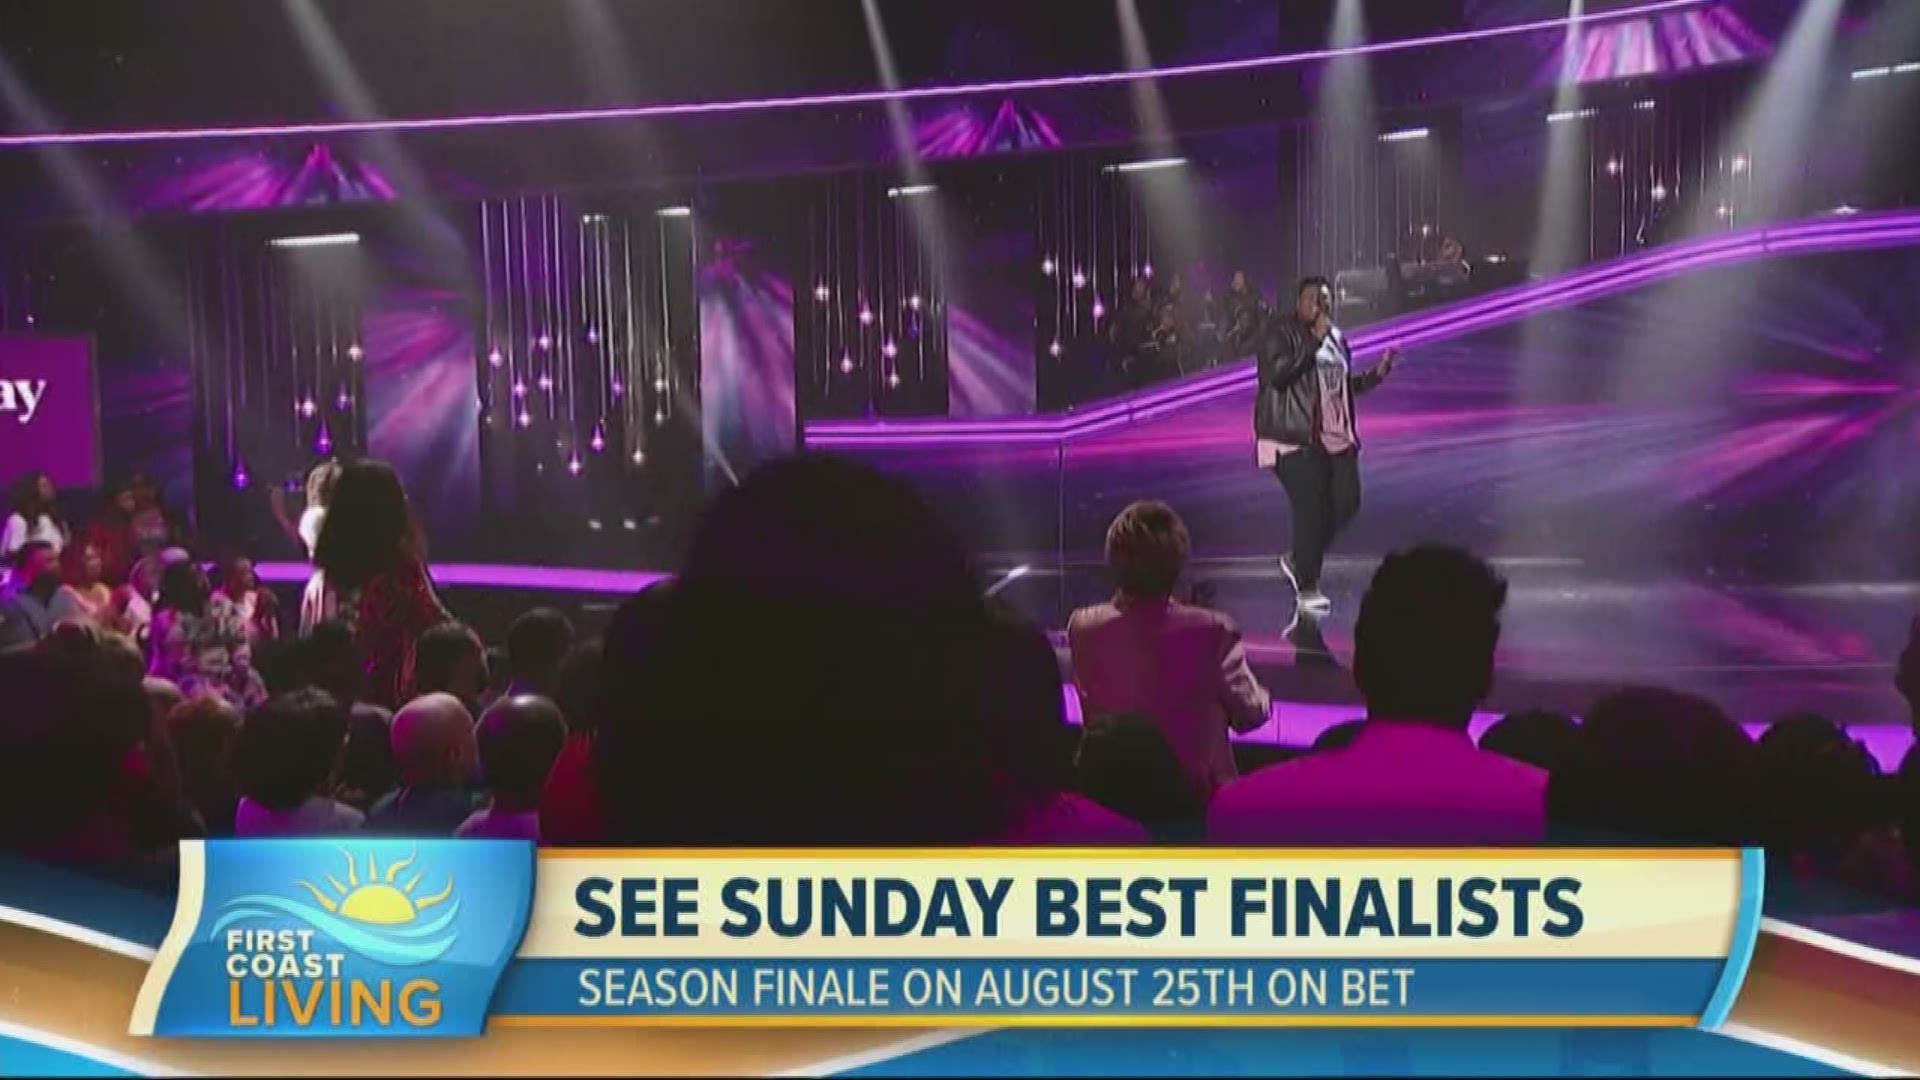 Catch BET's hit show Sunday Best season finale August 25th!